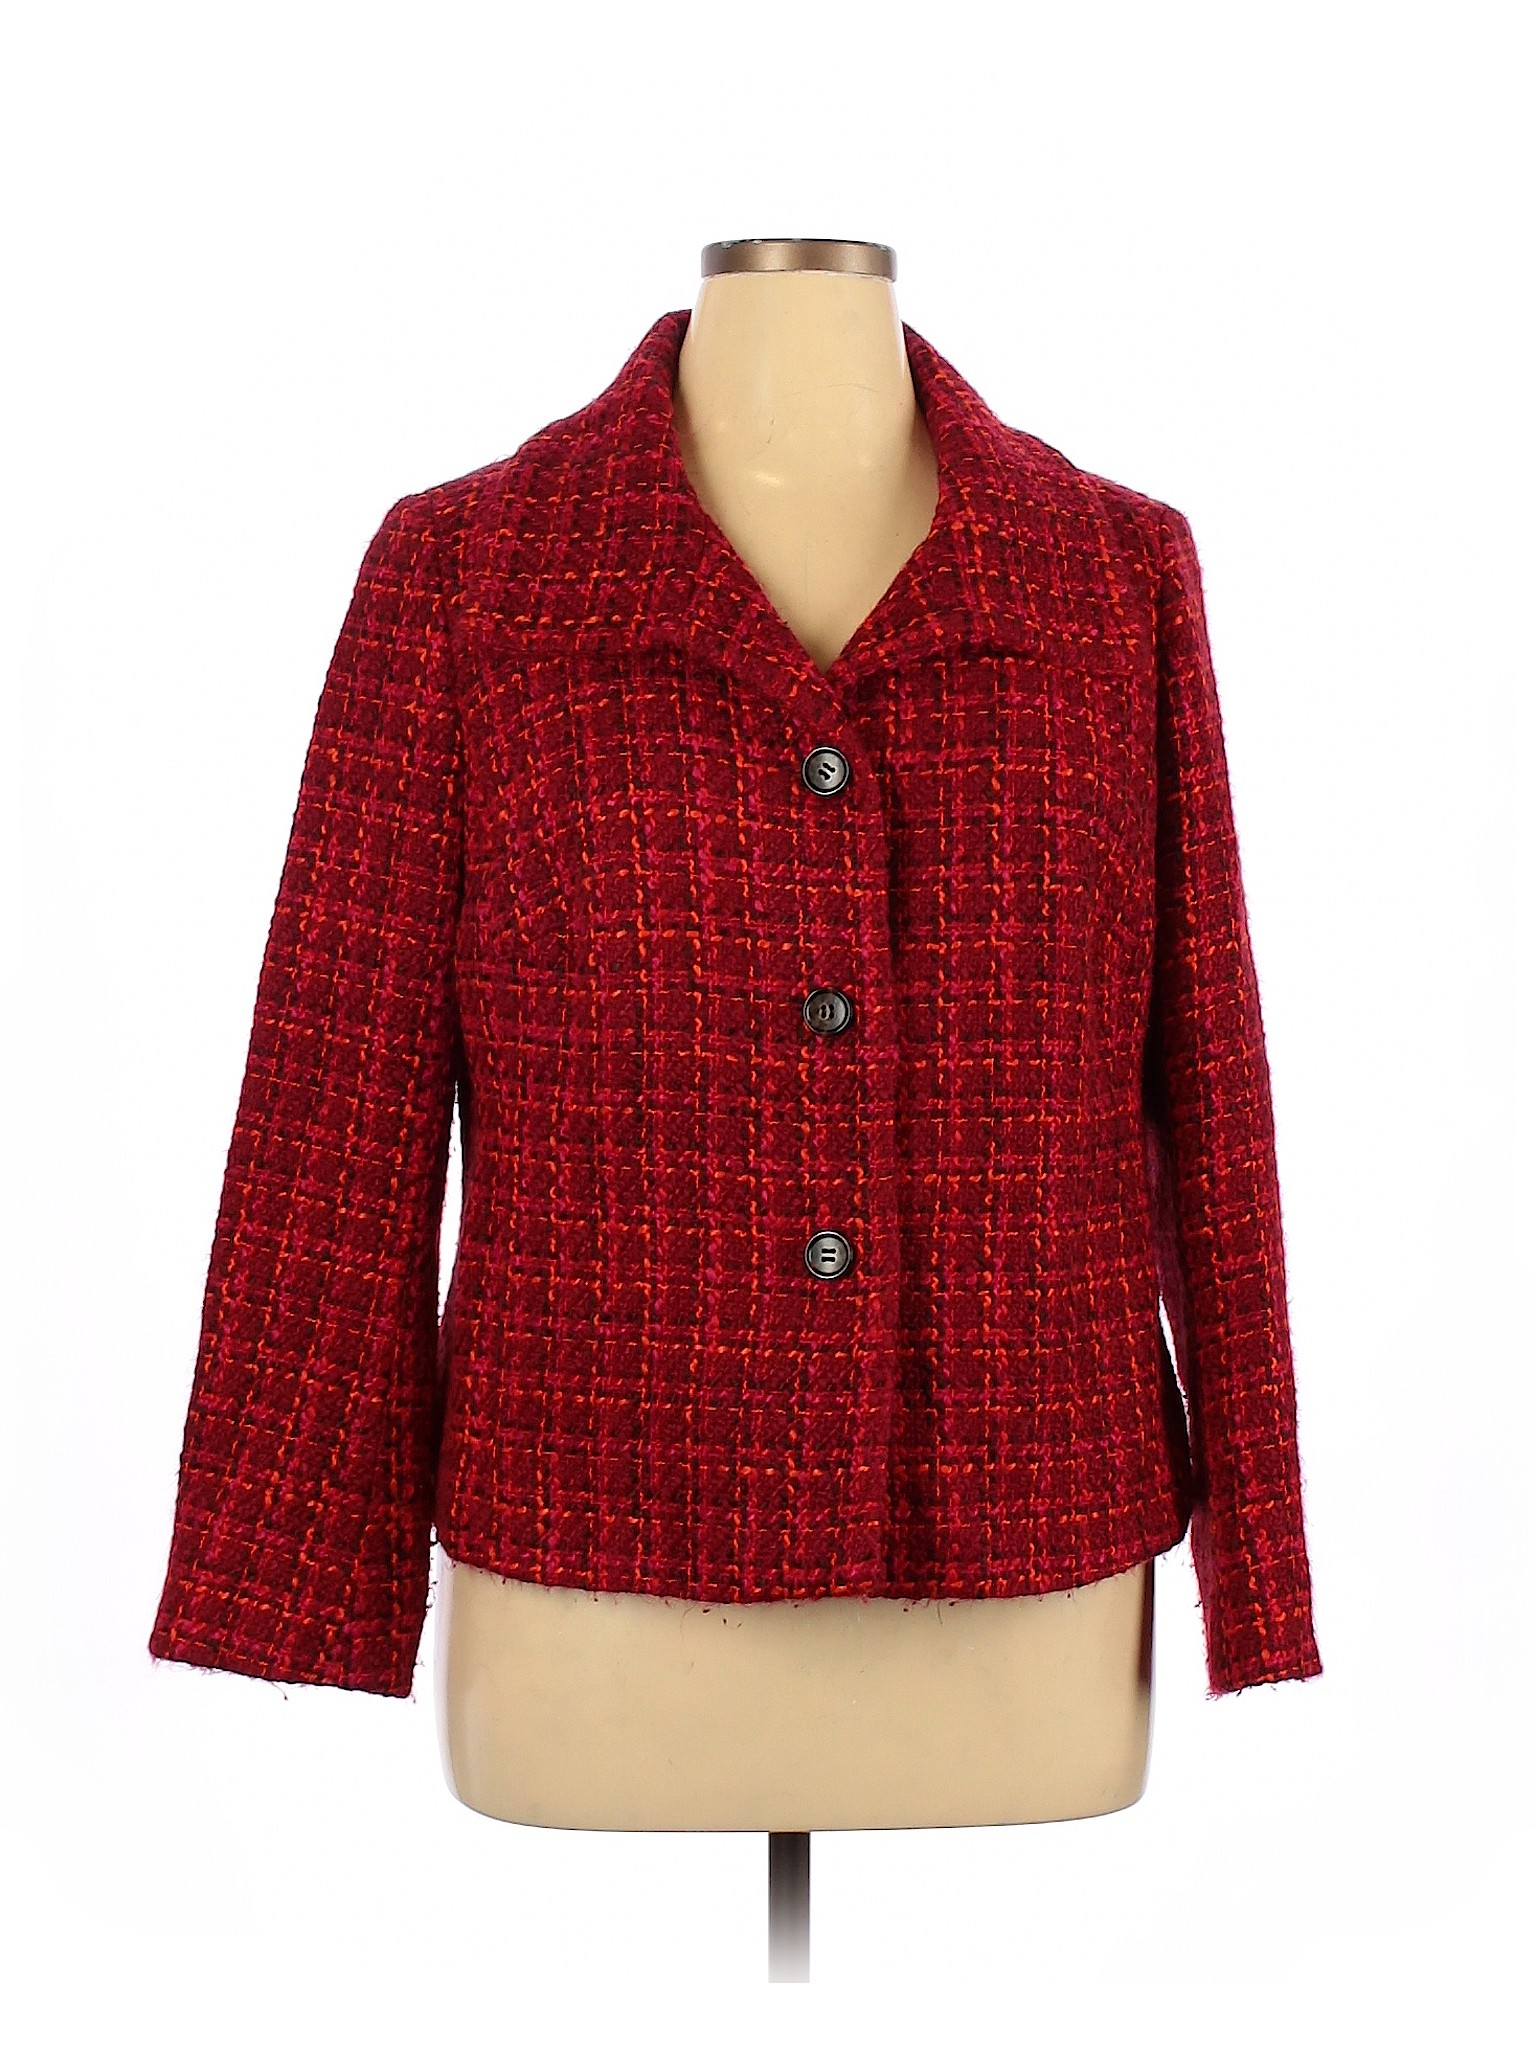 Talbots Women Red Coat 14 | eBay